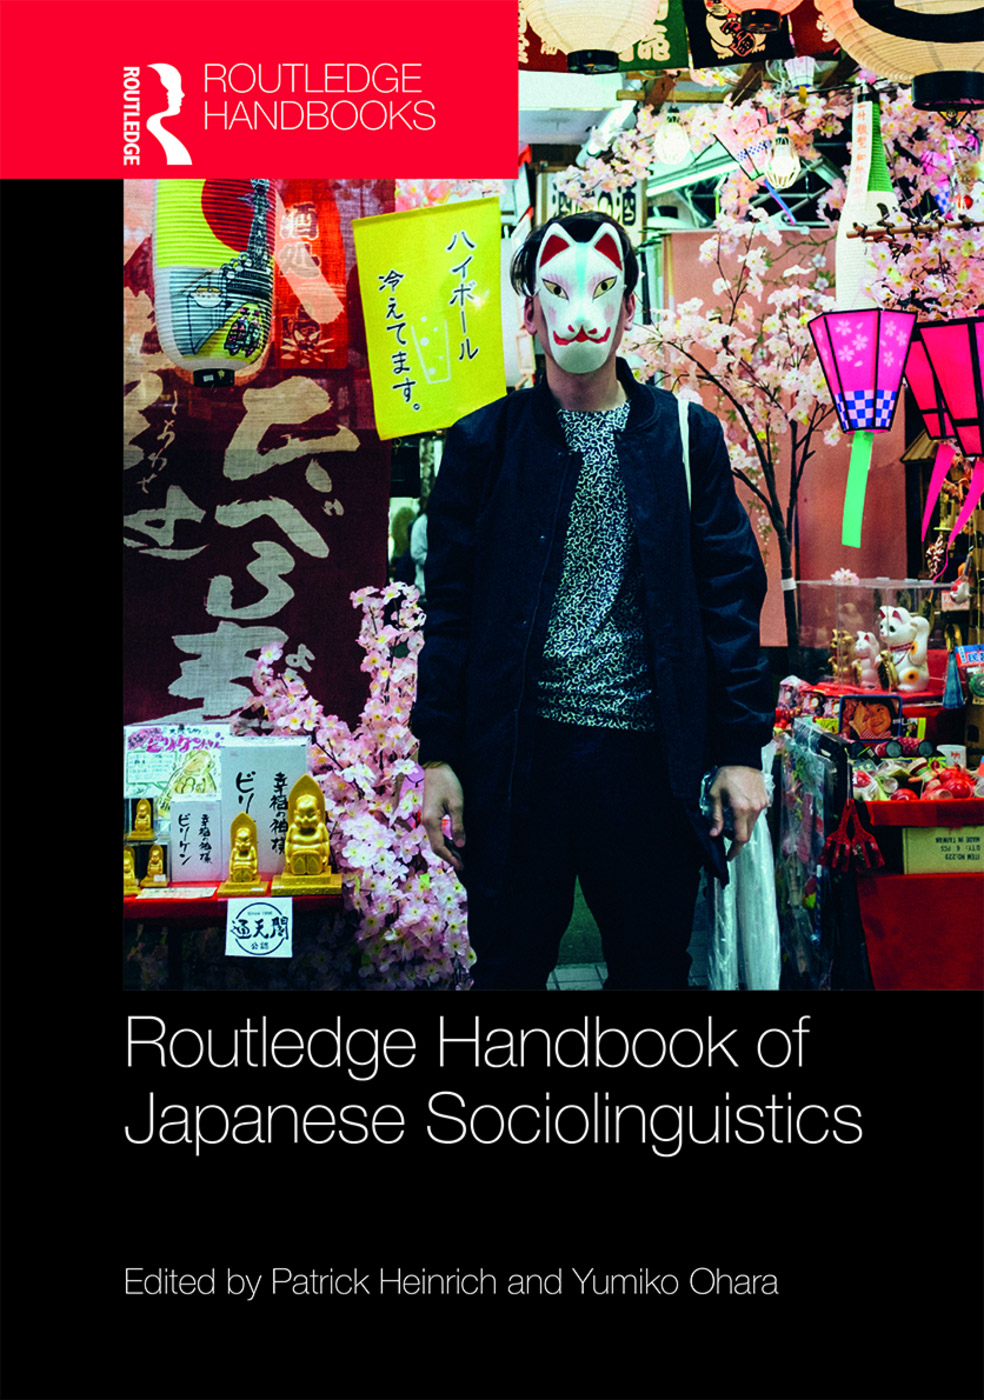 The Routledge Handbook of Japanese Sociolinguistics